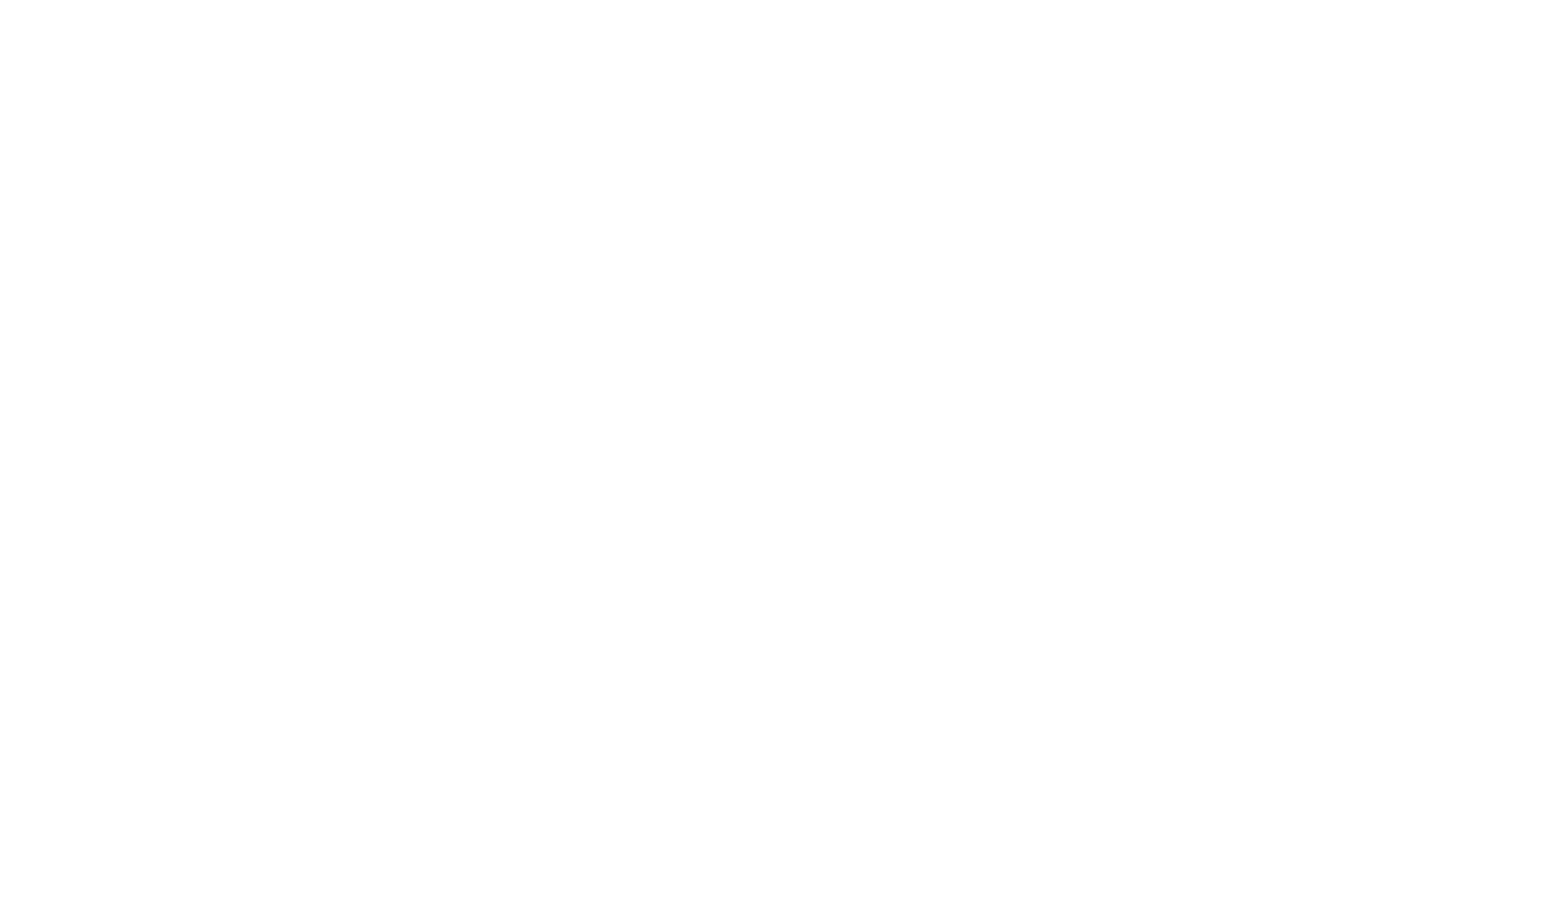 Qatar Gas Transport Company logo large for dark backgrounds (transparent PNG)